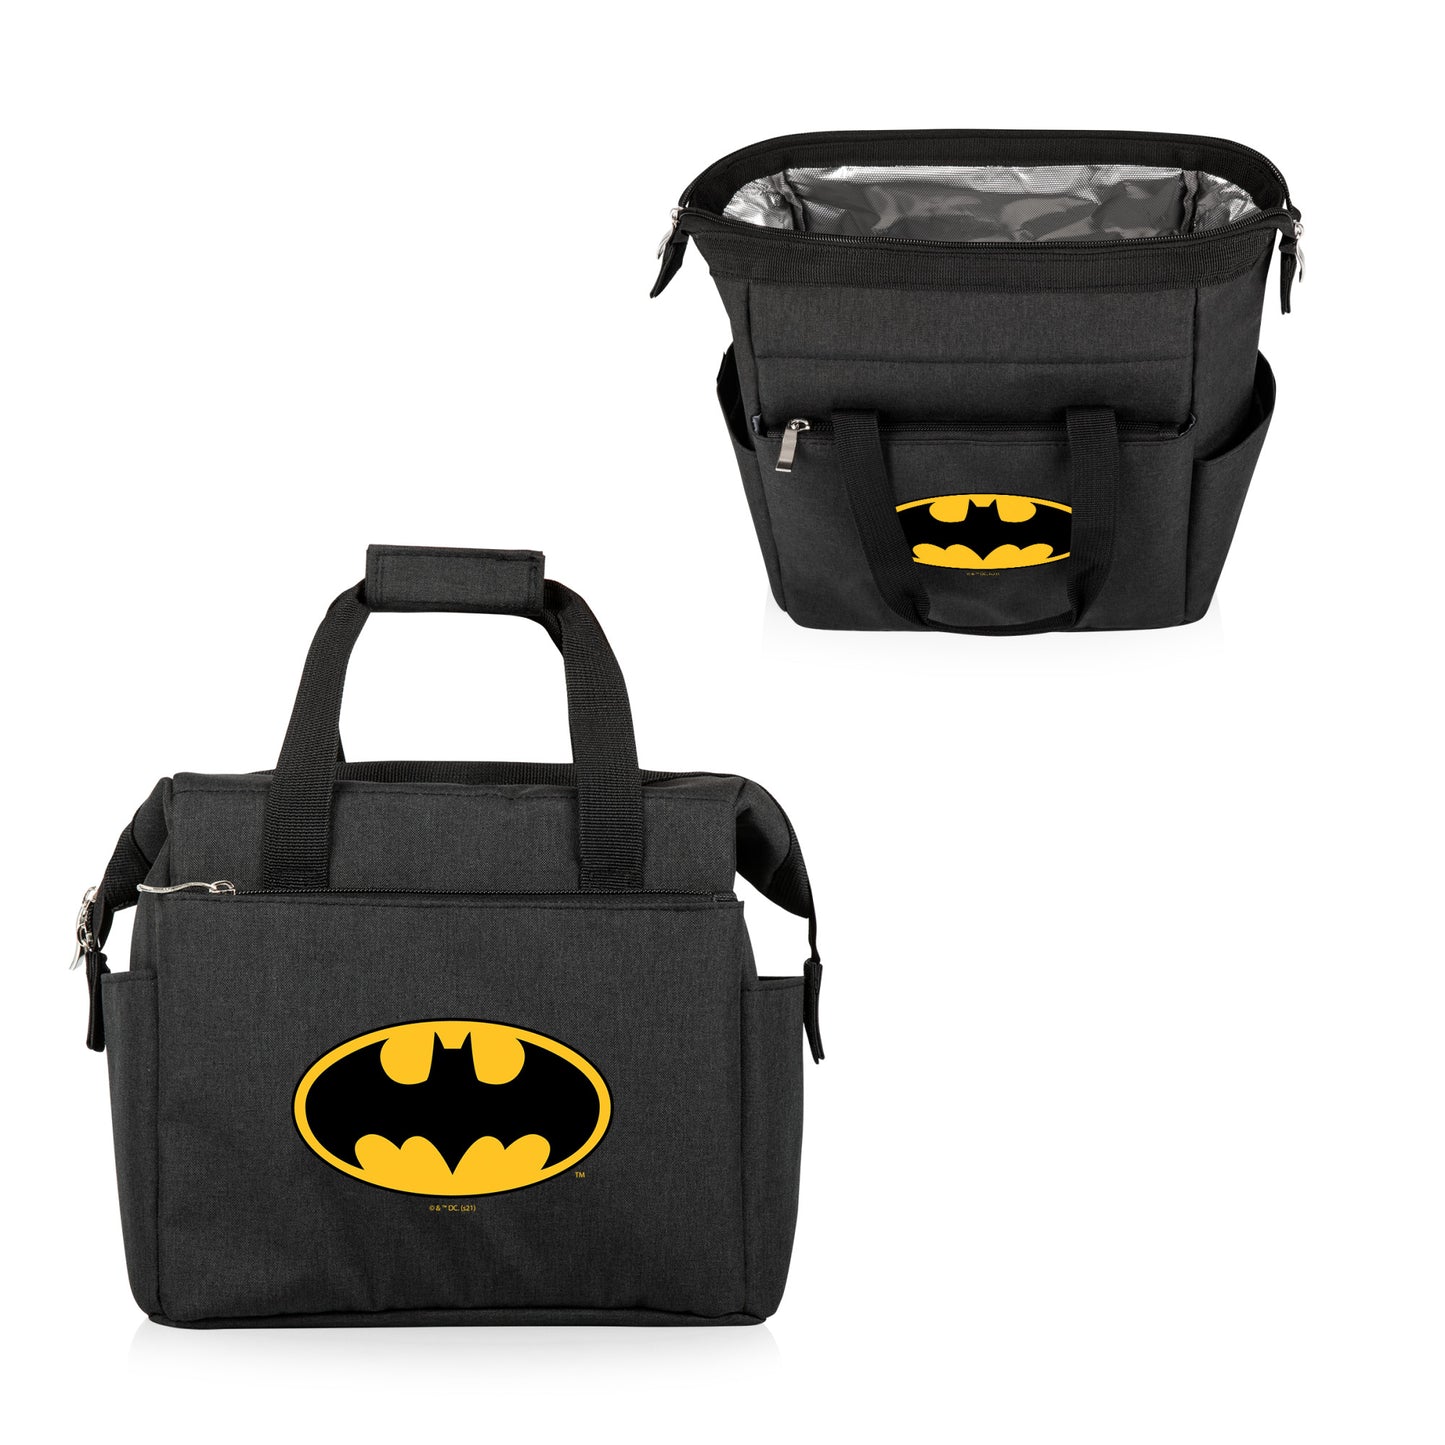 Batman Logo (DC Comics) Insulated Lunch Tote Bag